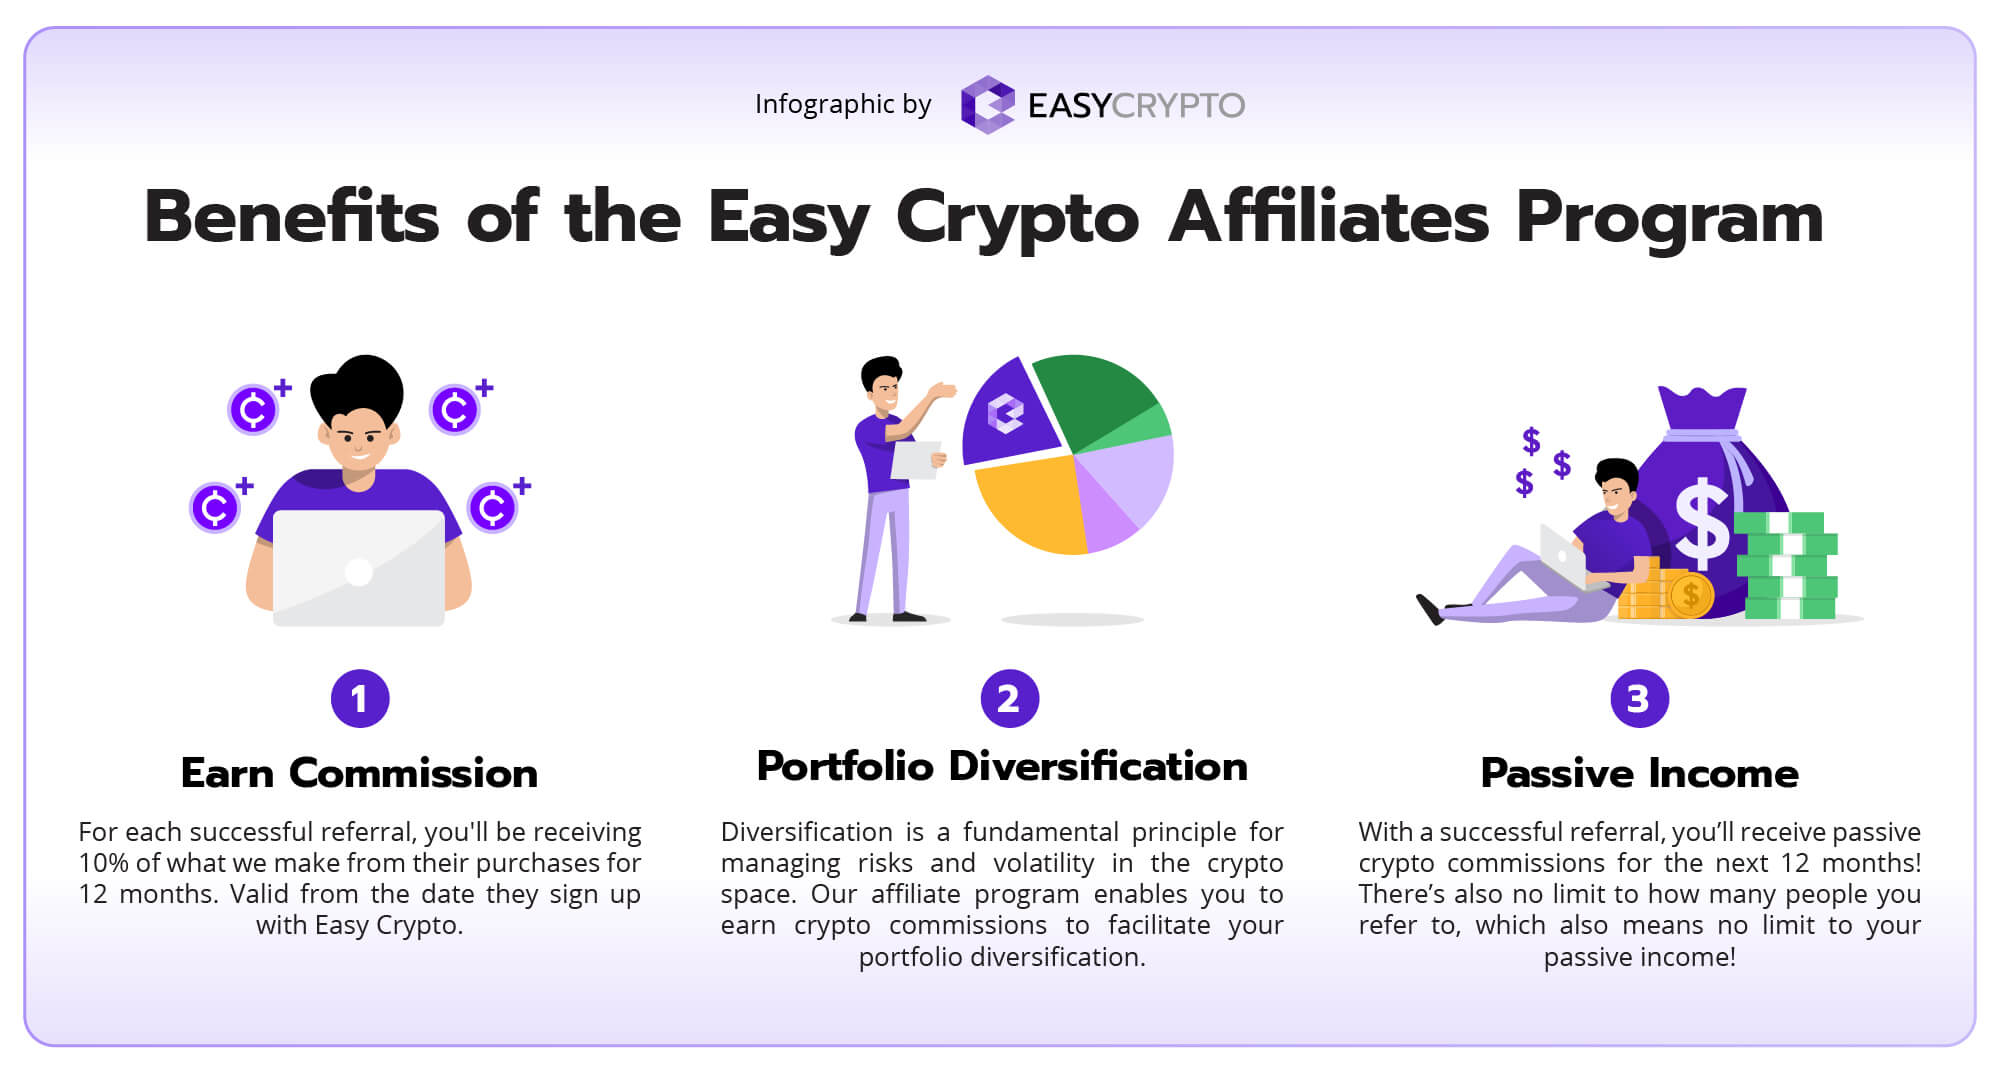 infographic explaining the benefits of the Easy Crypto affiliates program.